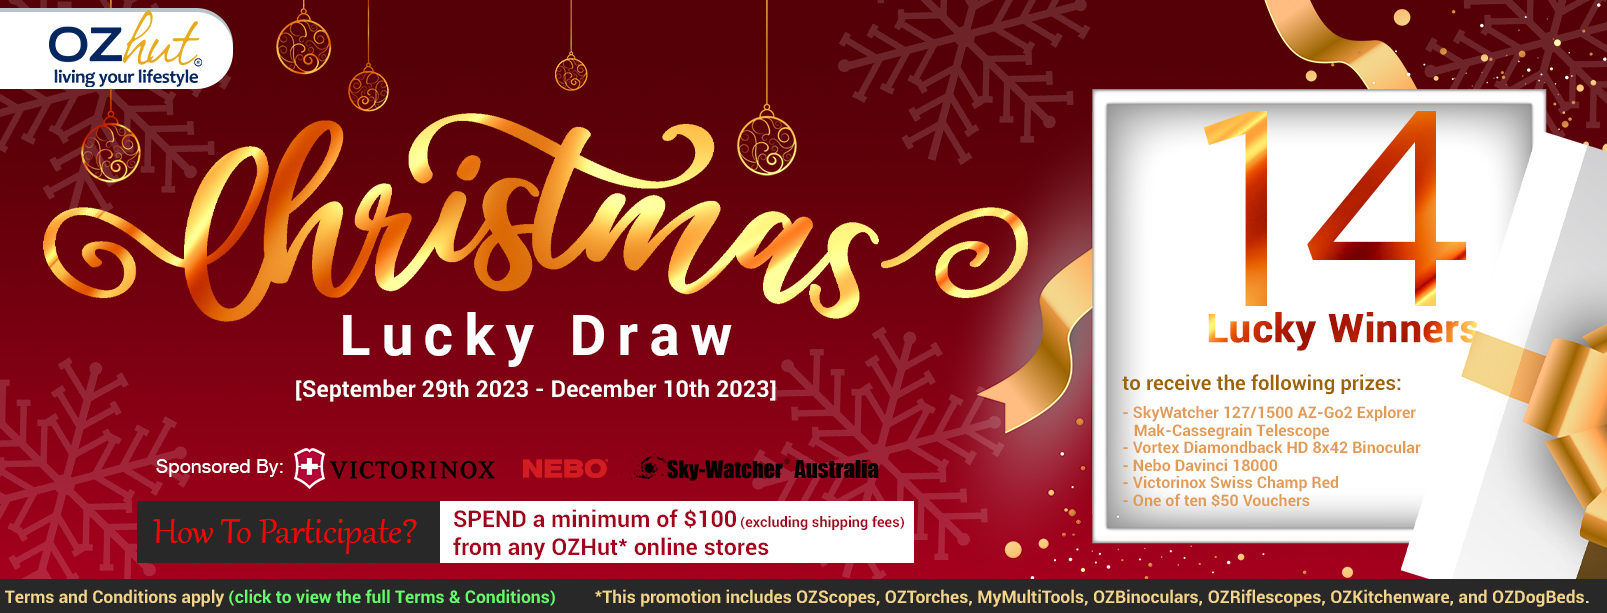 Christmas Prize Draw